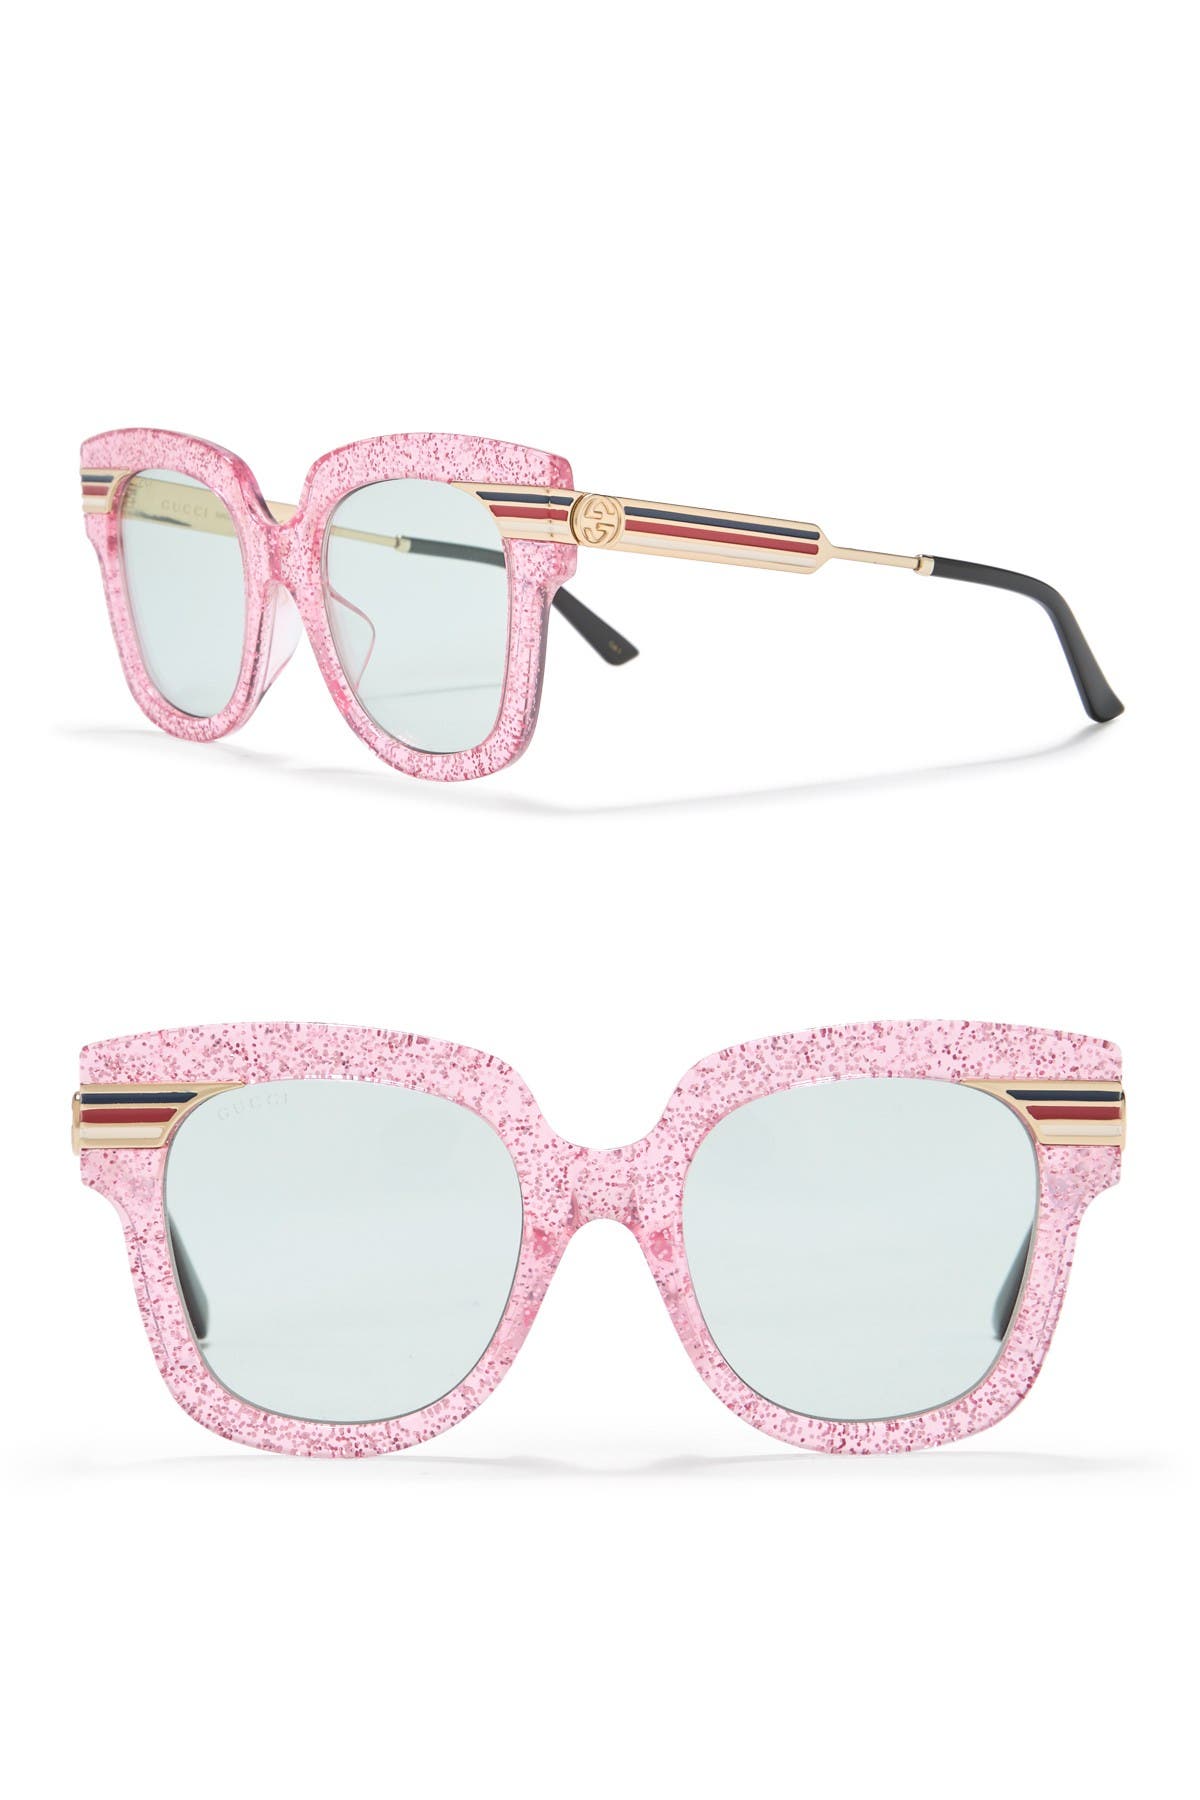 gucci sunglasses pink glitter